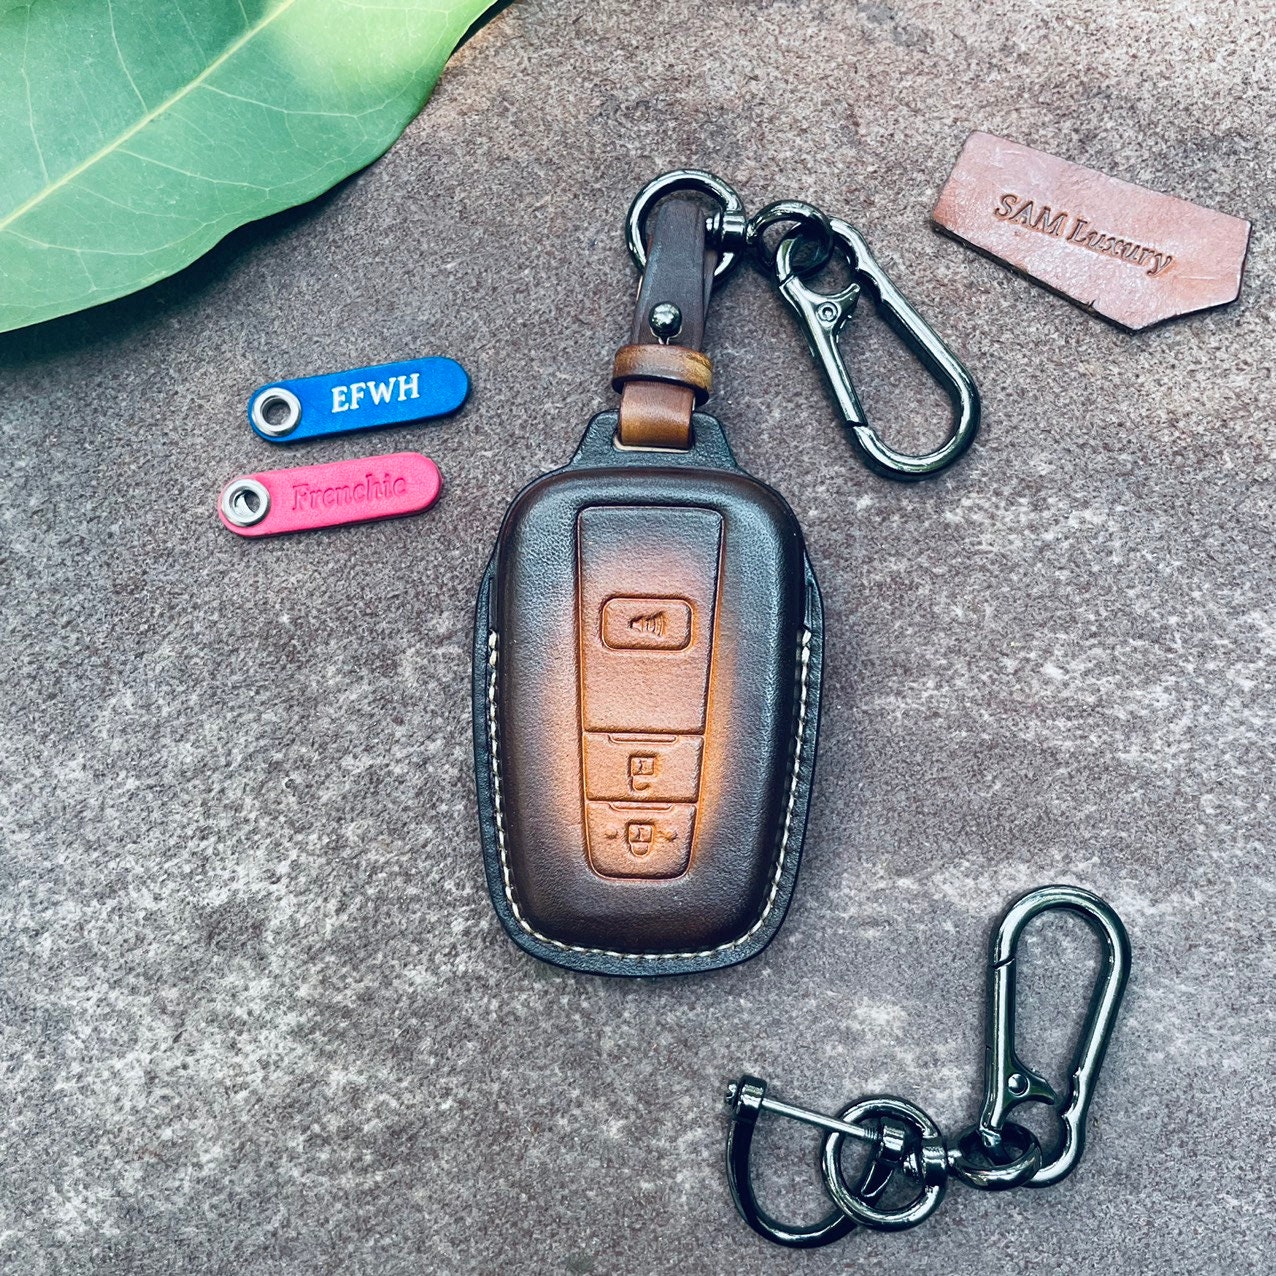 Toyota GT86 86 Genuine Leather Smart Remote Key Case Cover - Korean Auto  Imports